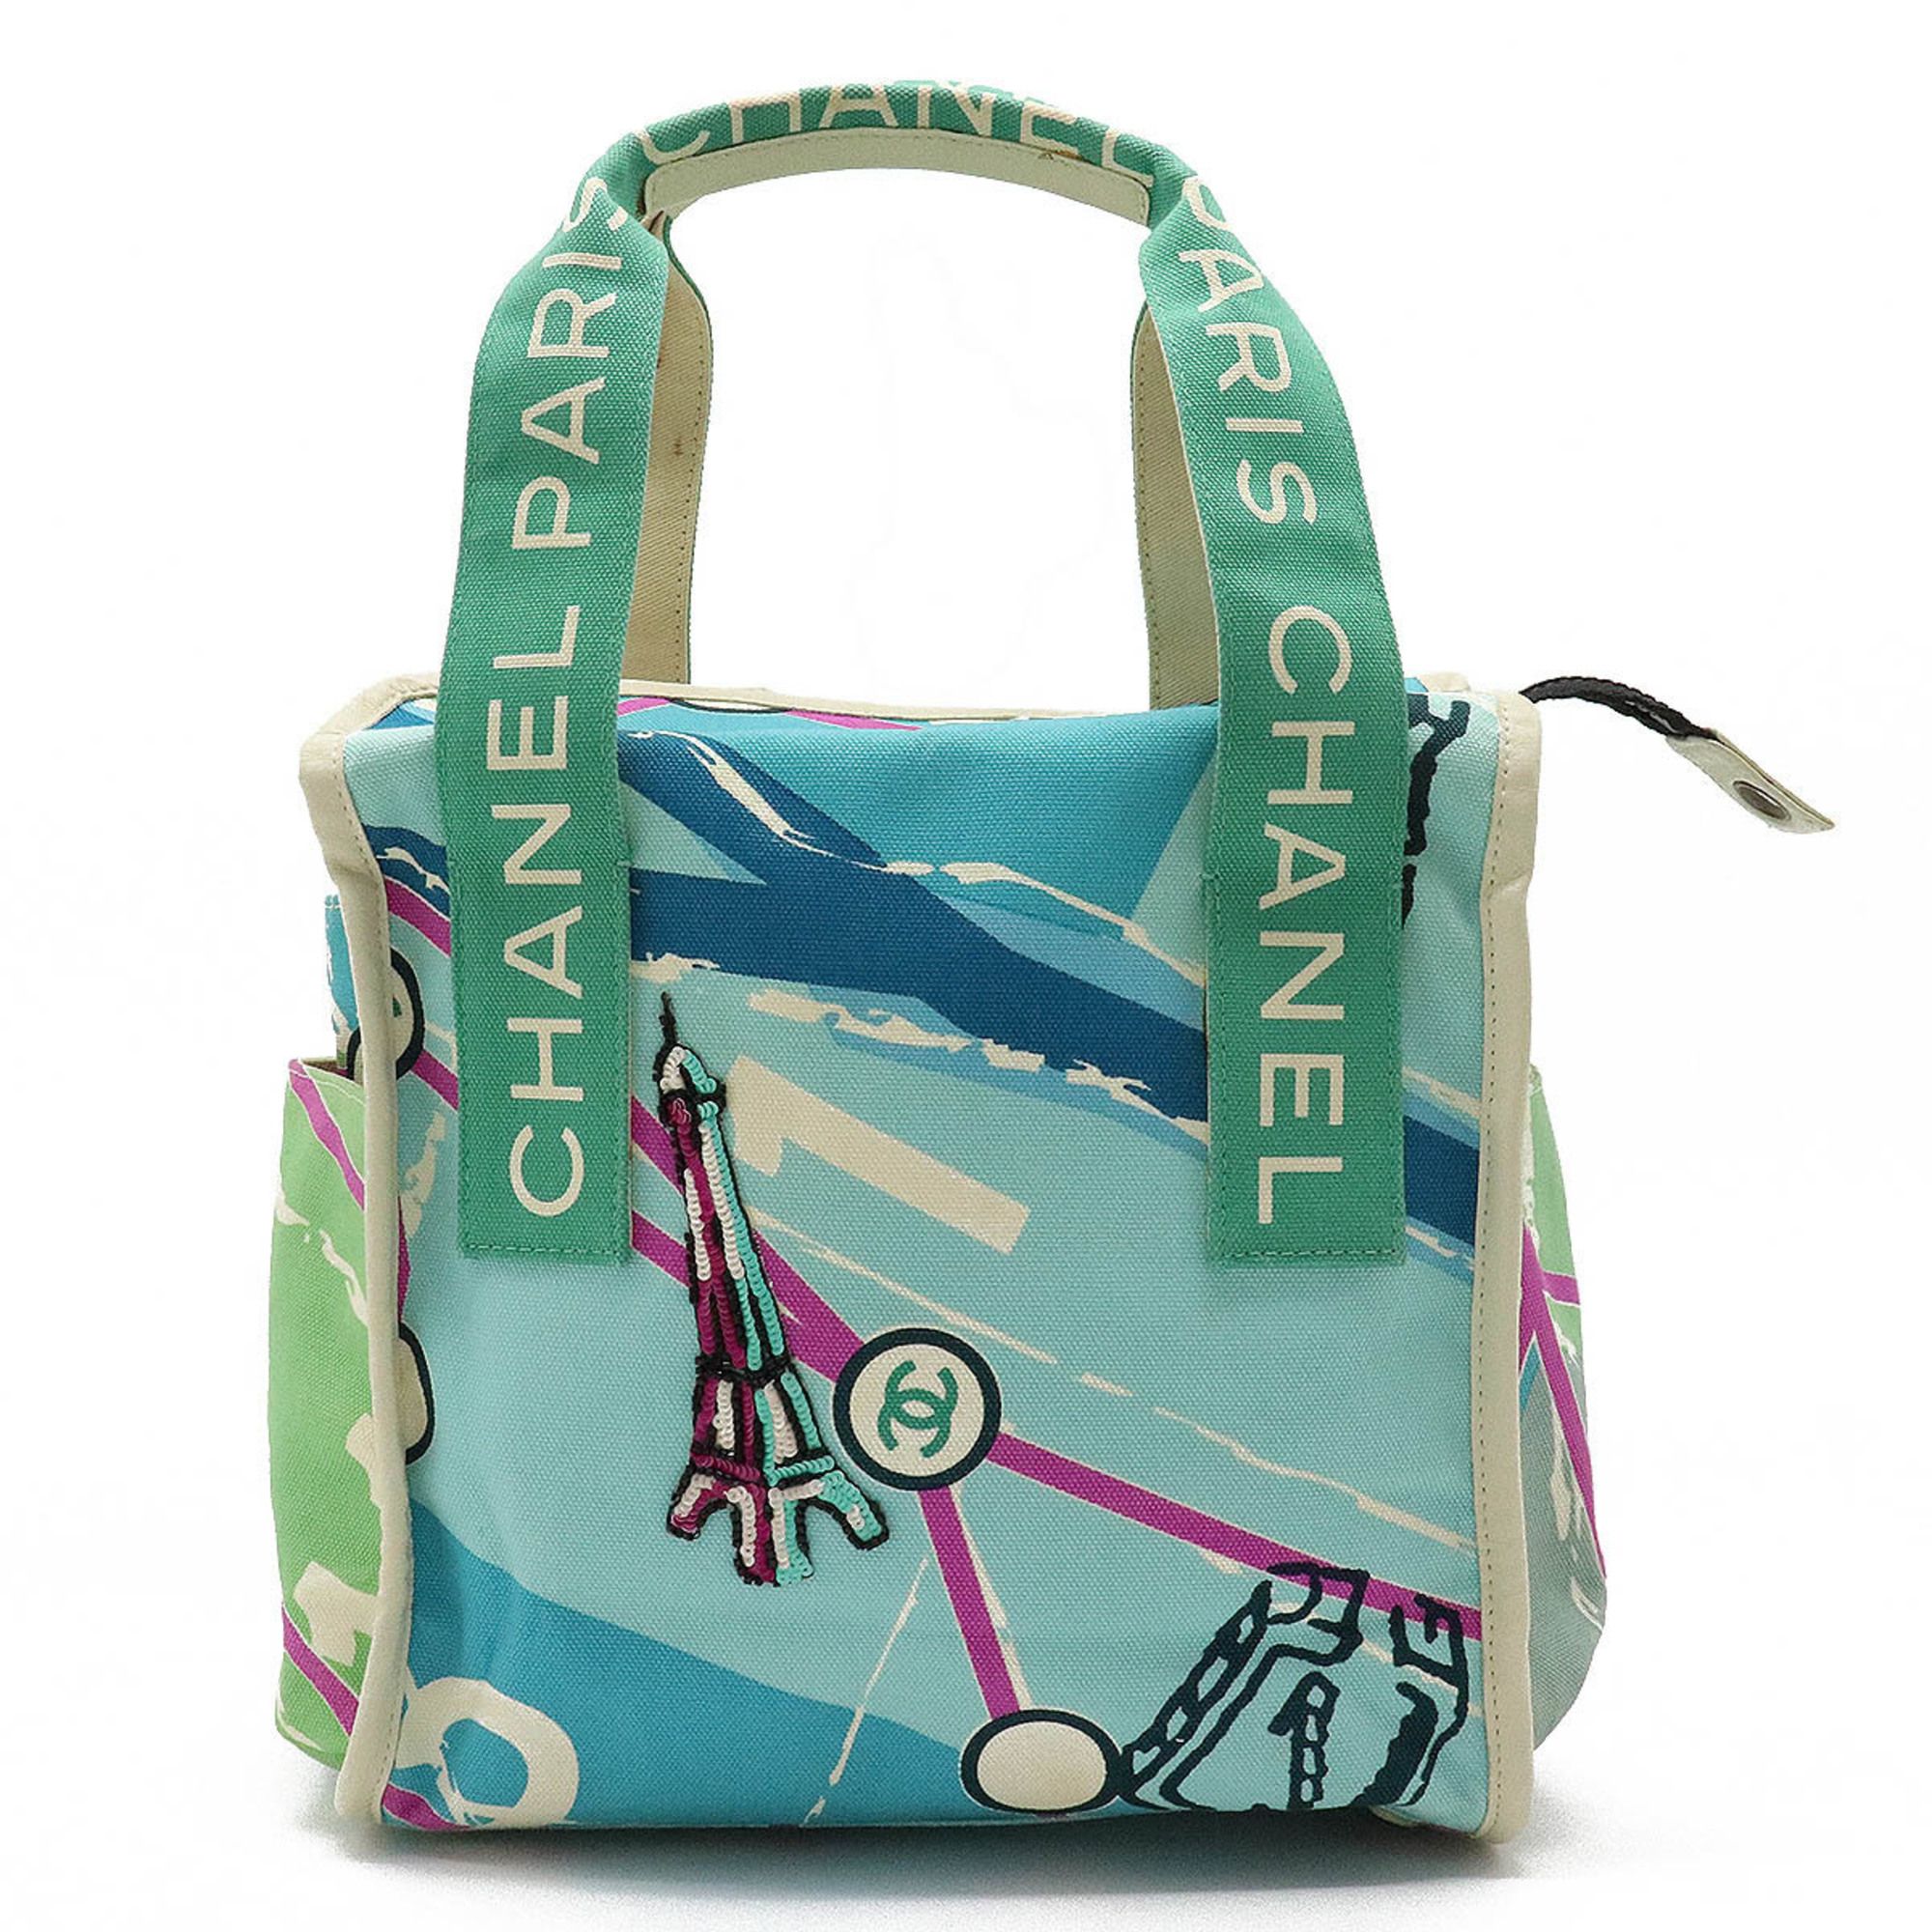 Chanel Chanel Cruise Line Paris Map Eiffel Tower Handbag Tote Bag